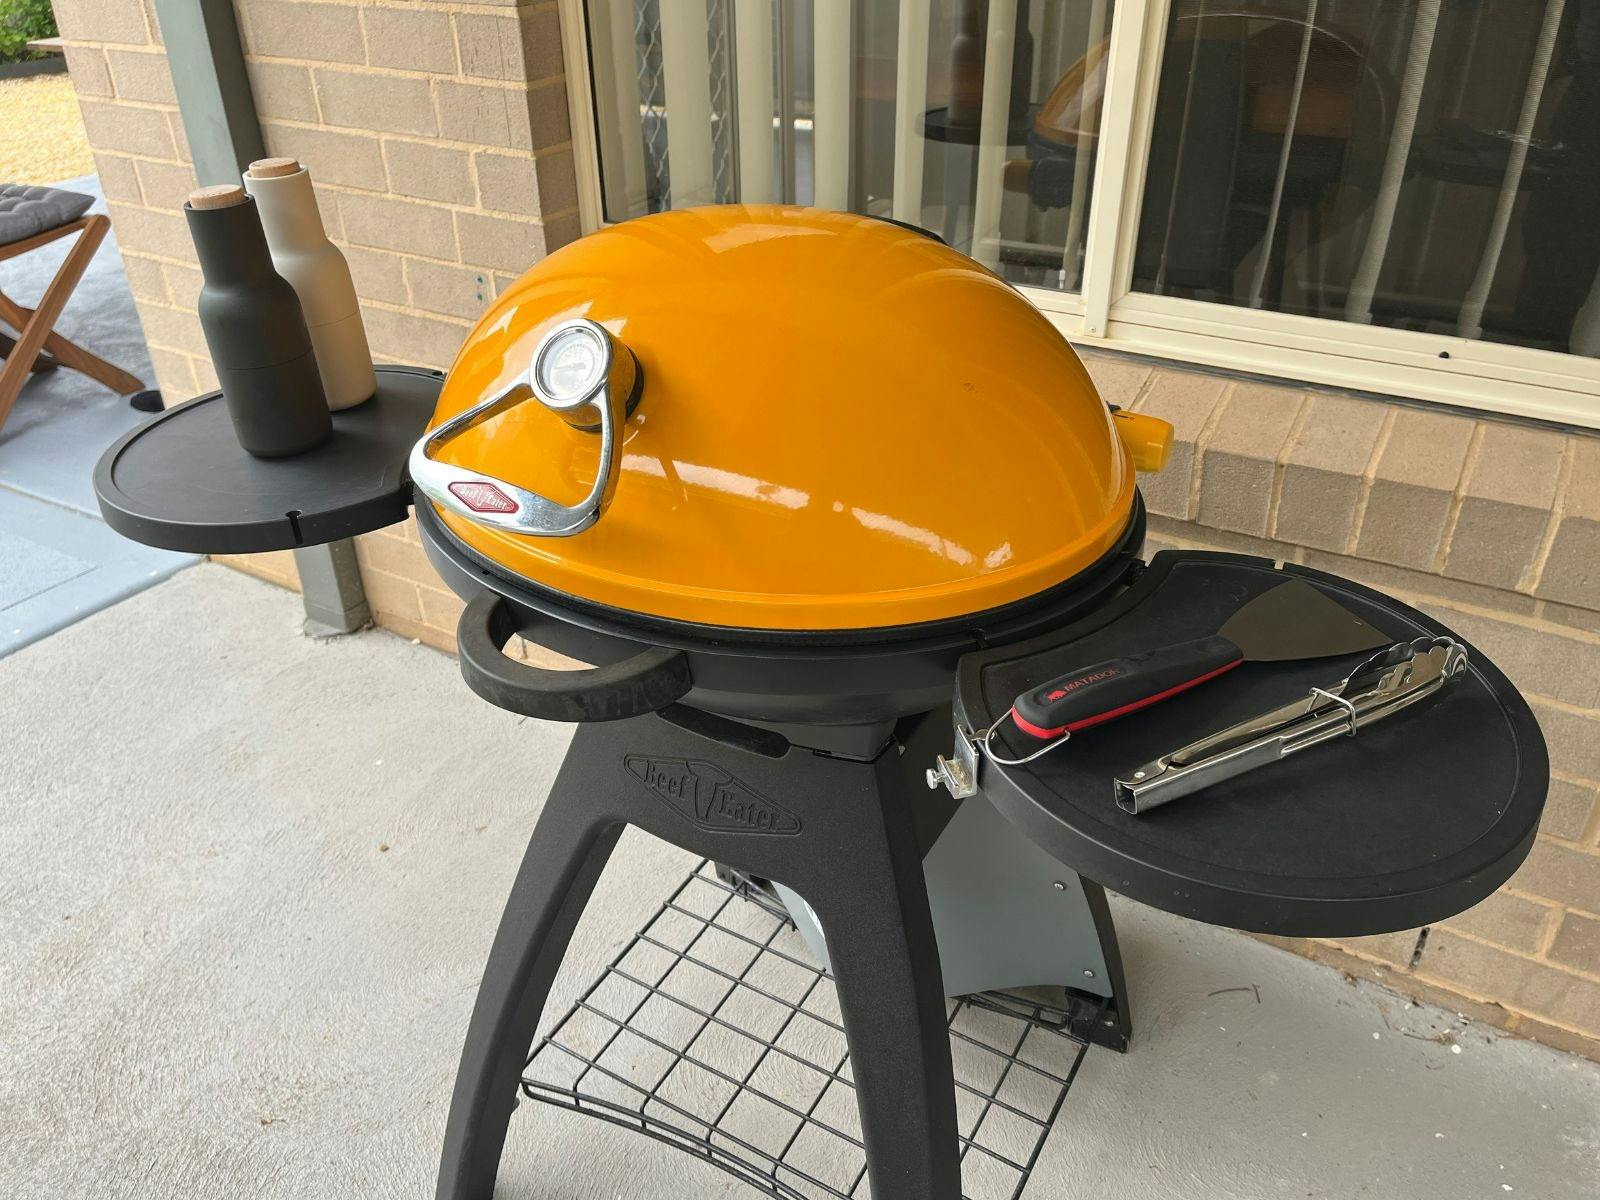 An orange barbeque